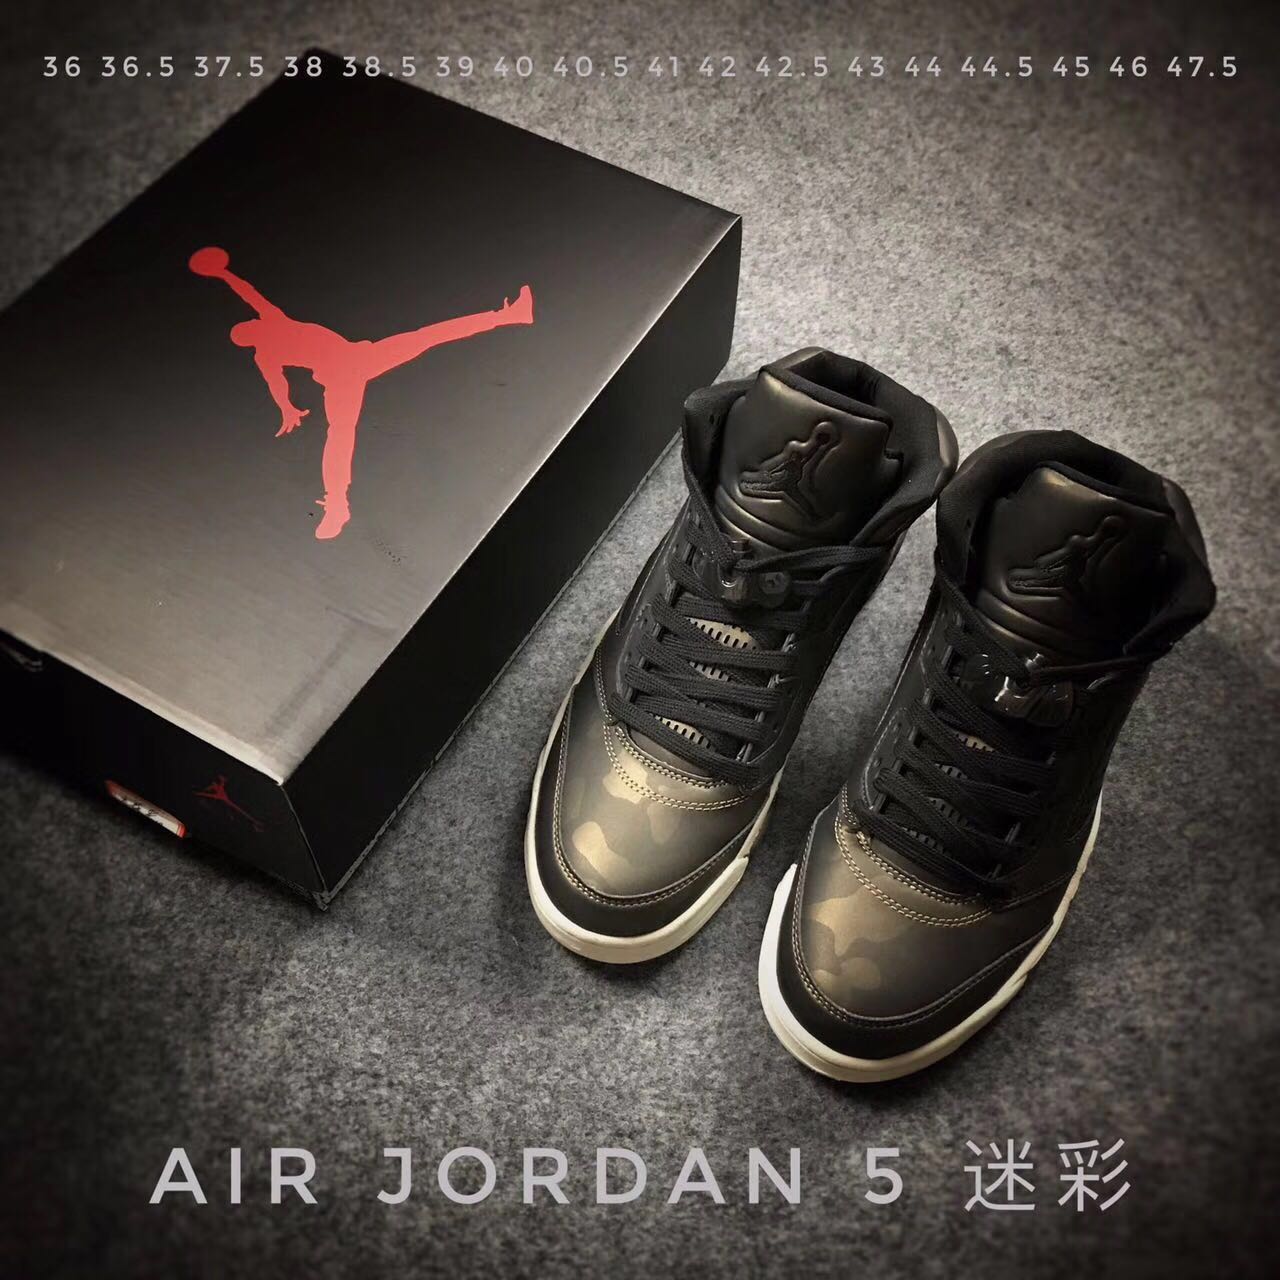 Air Jordan 5 Premium Heiress Metallic Field Shoes